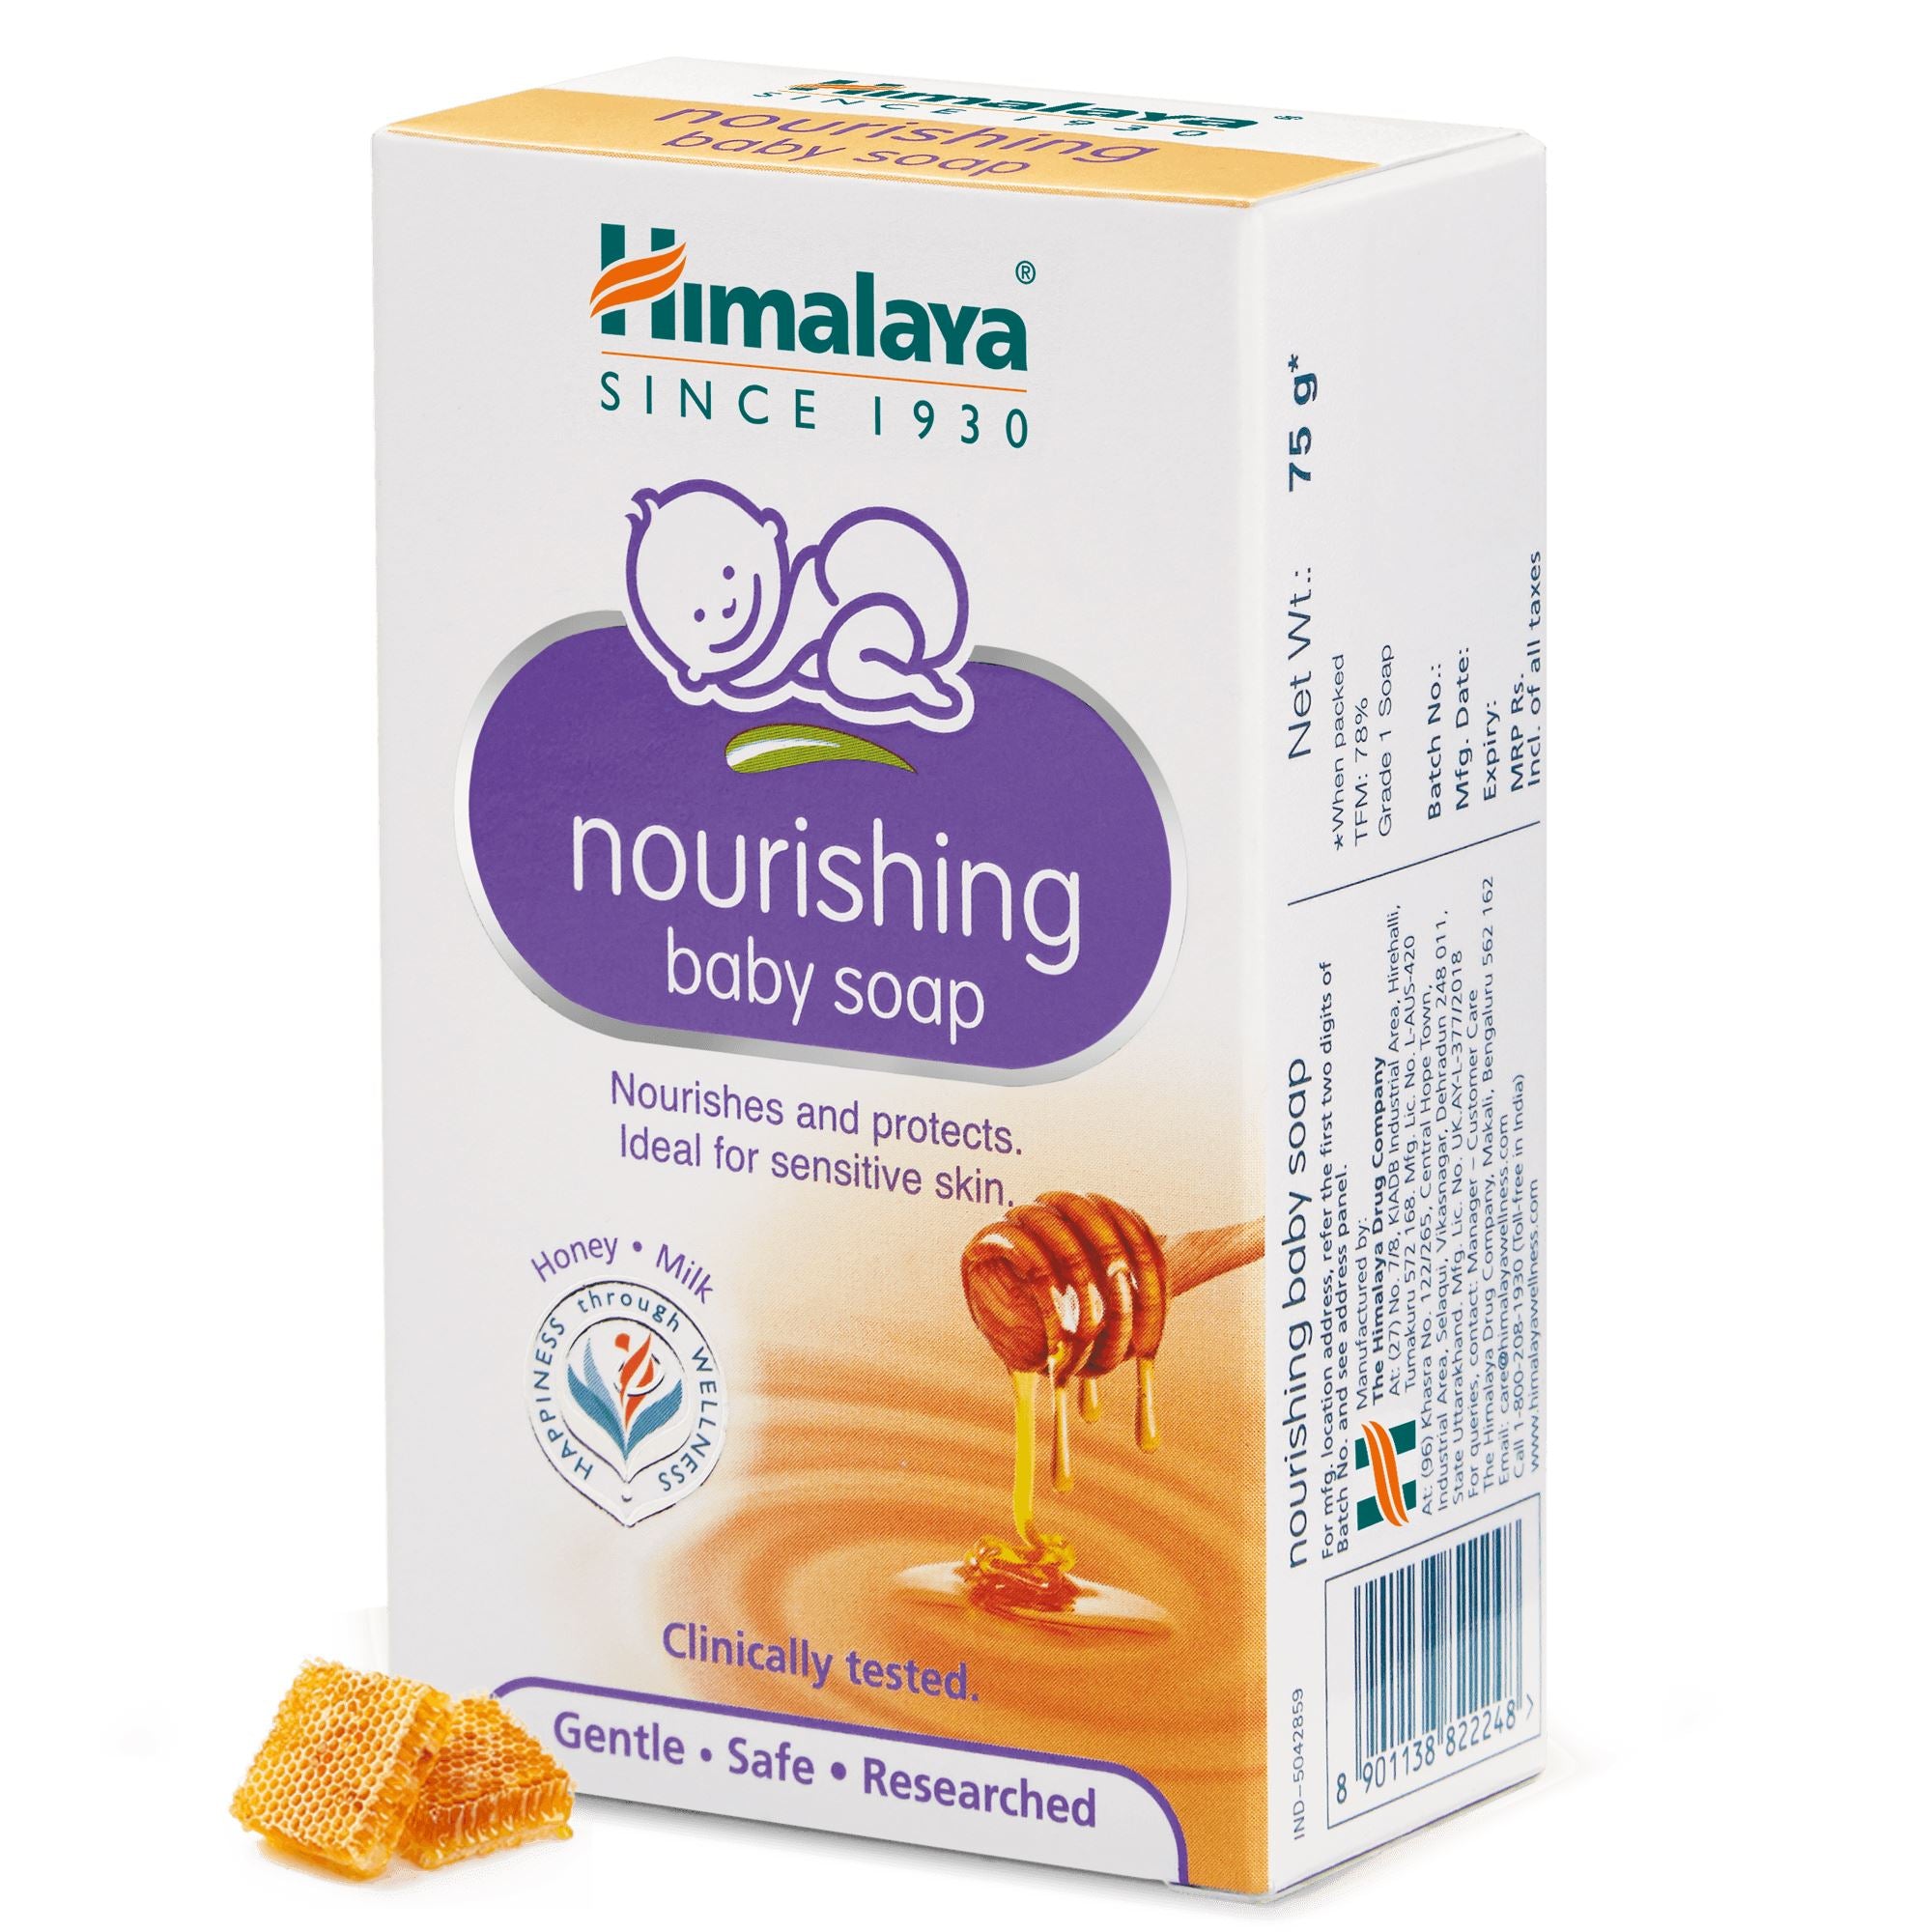 Himalaya Nourishing baby soap 75g- Gentle nourishment for baby's sensitive skin